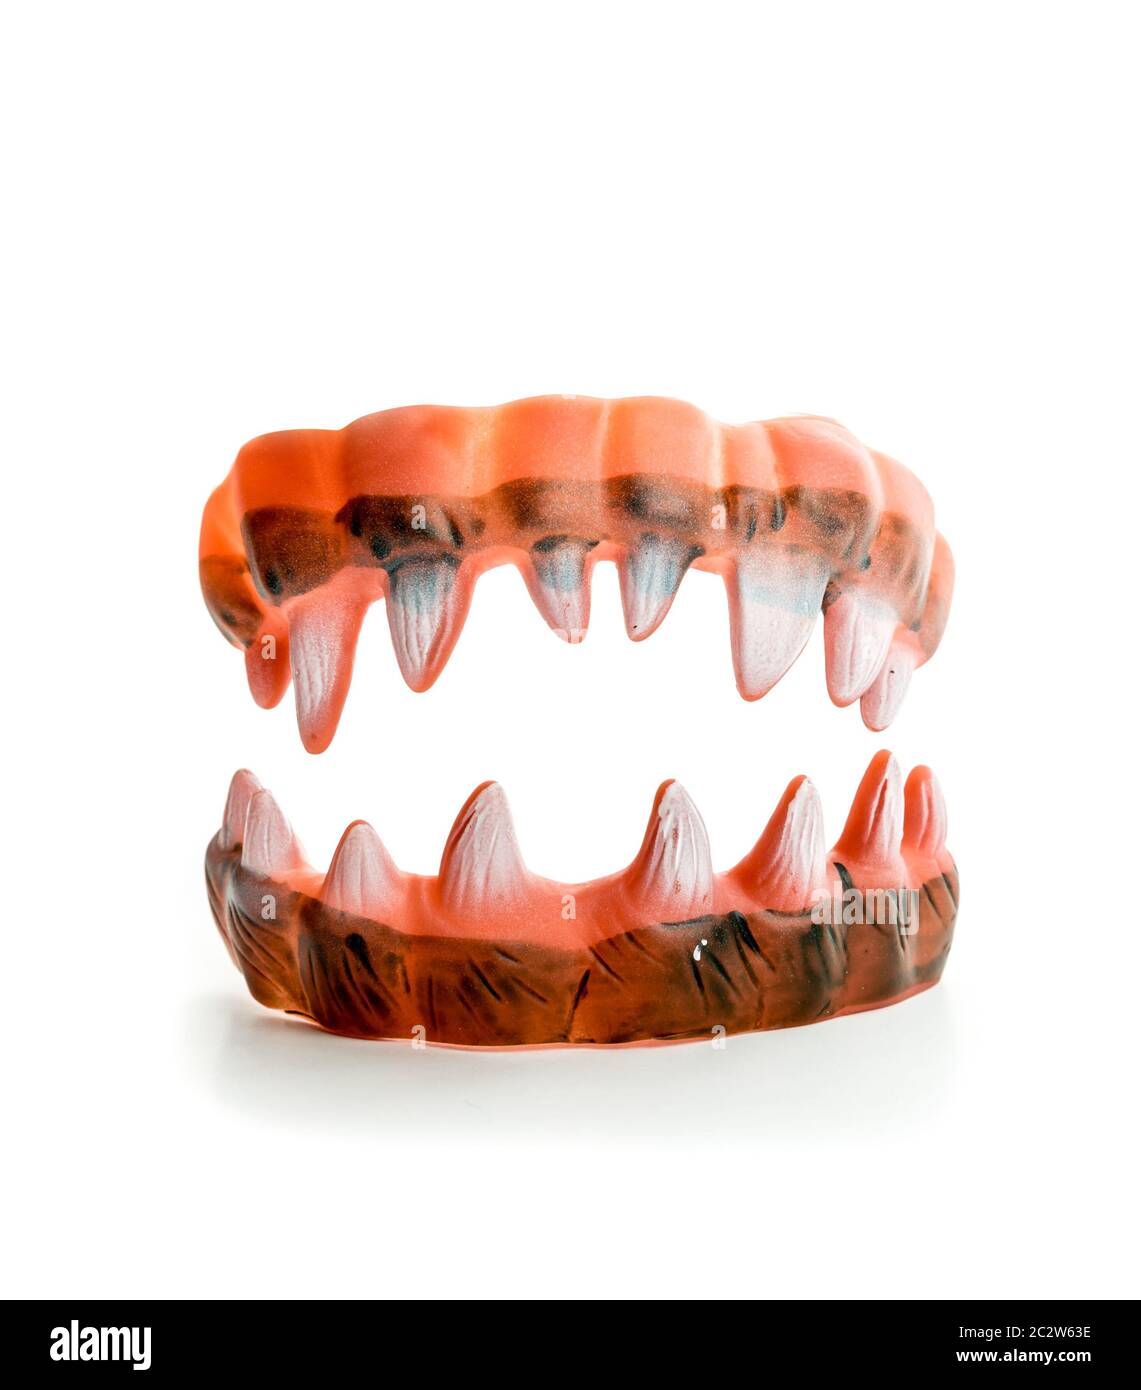 Monster's ugly sharp teeth on white Stock Photo